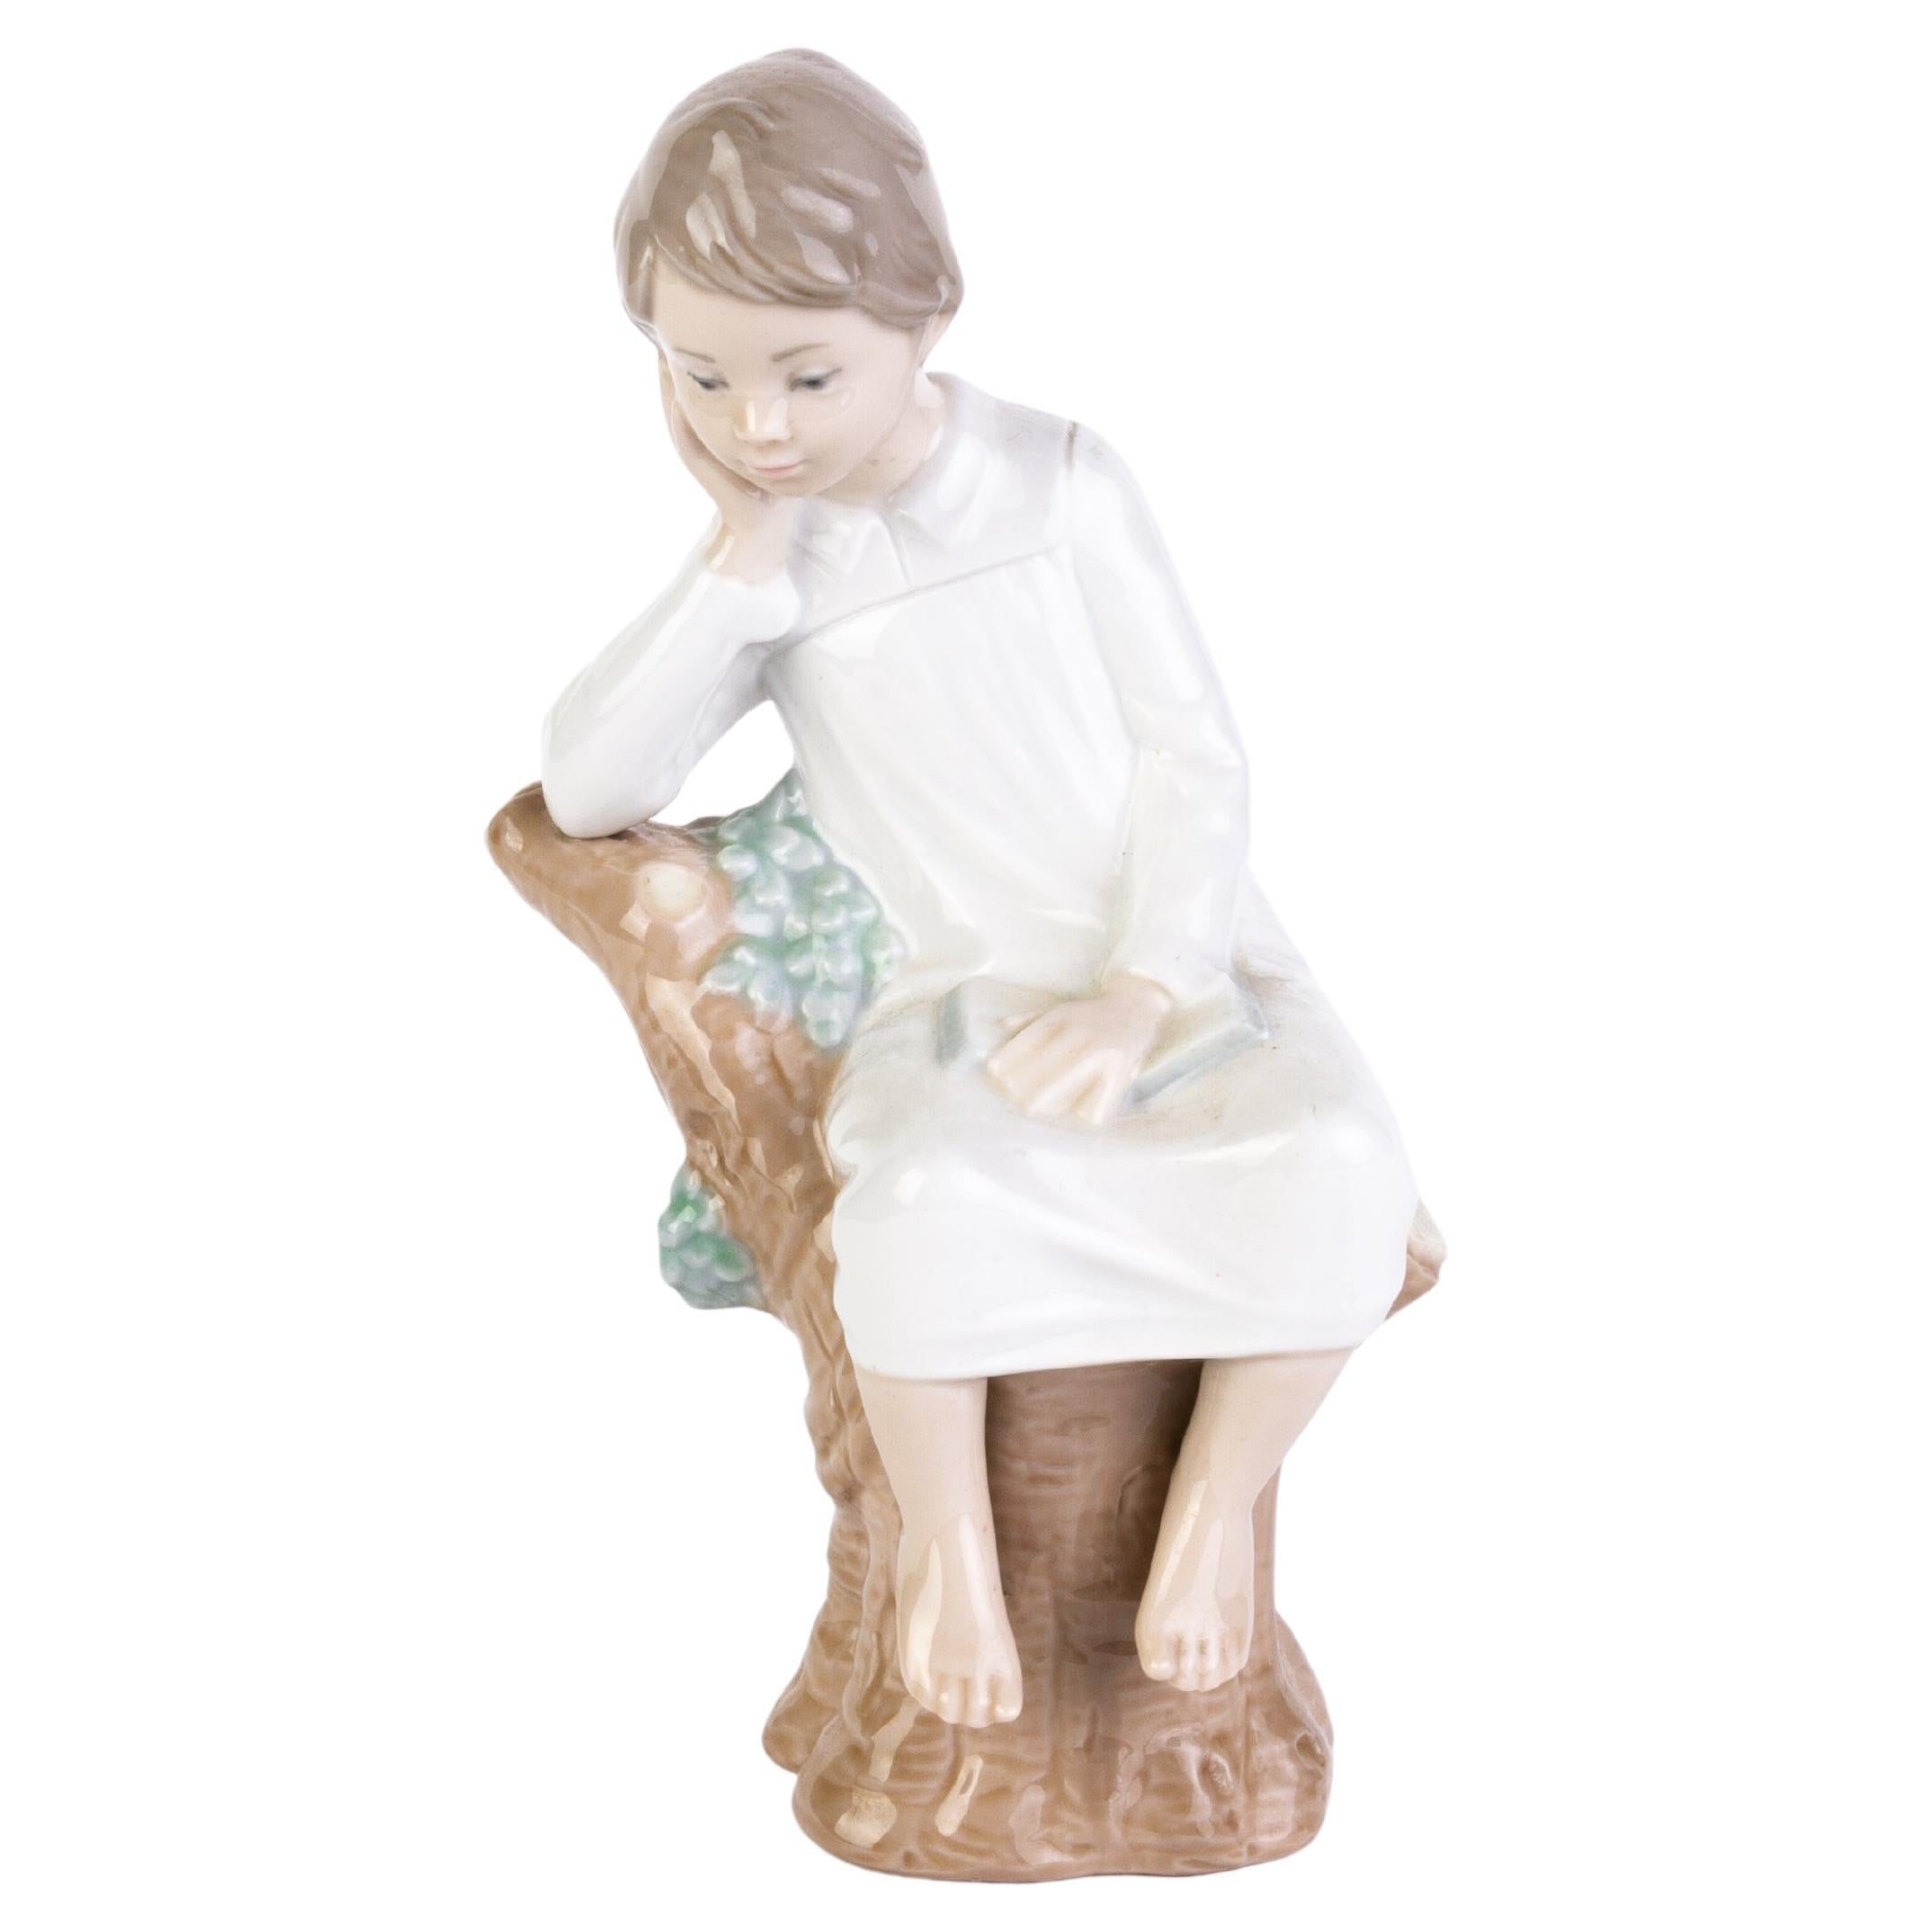 Retired Lladro Fine Porcelain Sculpture Figure Group "Thinker Little Boy" 4876 For Sale